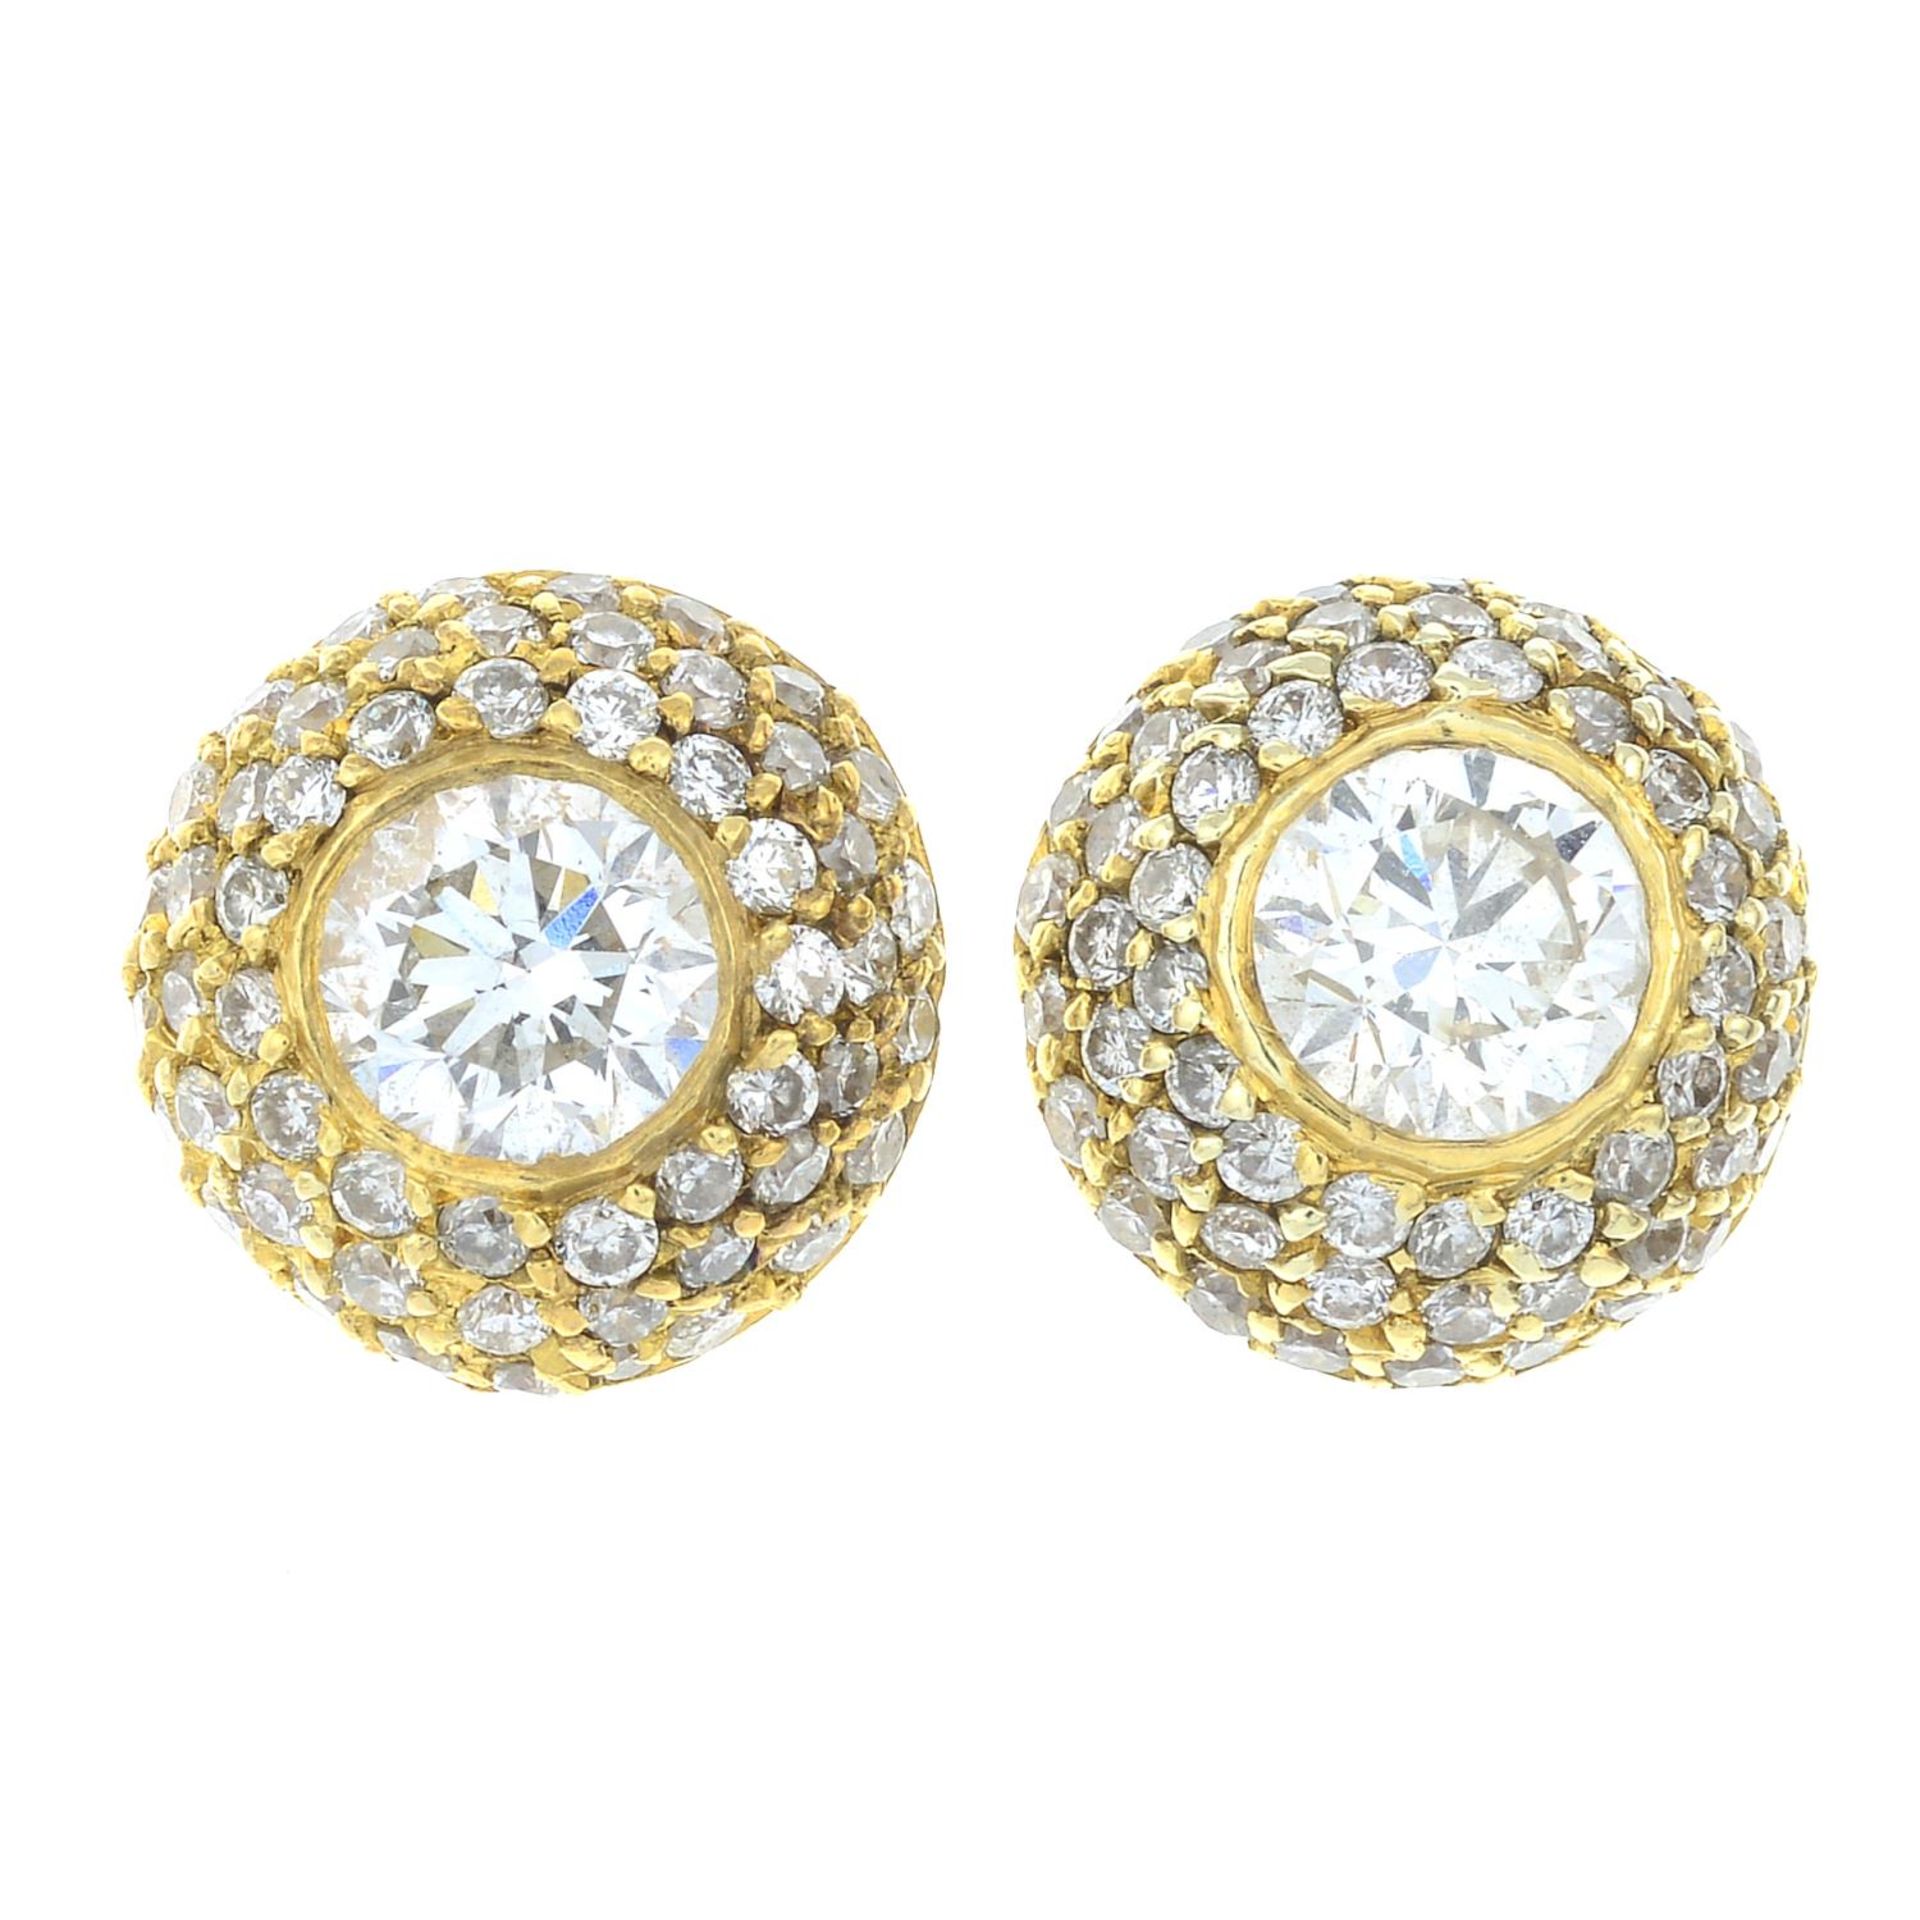 A pair of brilliant-cut diamond stud earrings, - Image 3 of 5